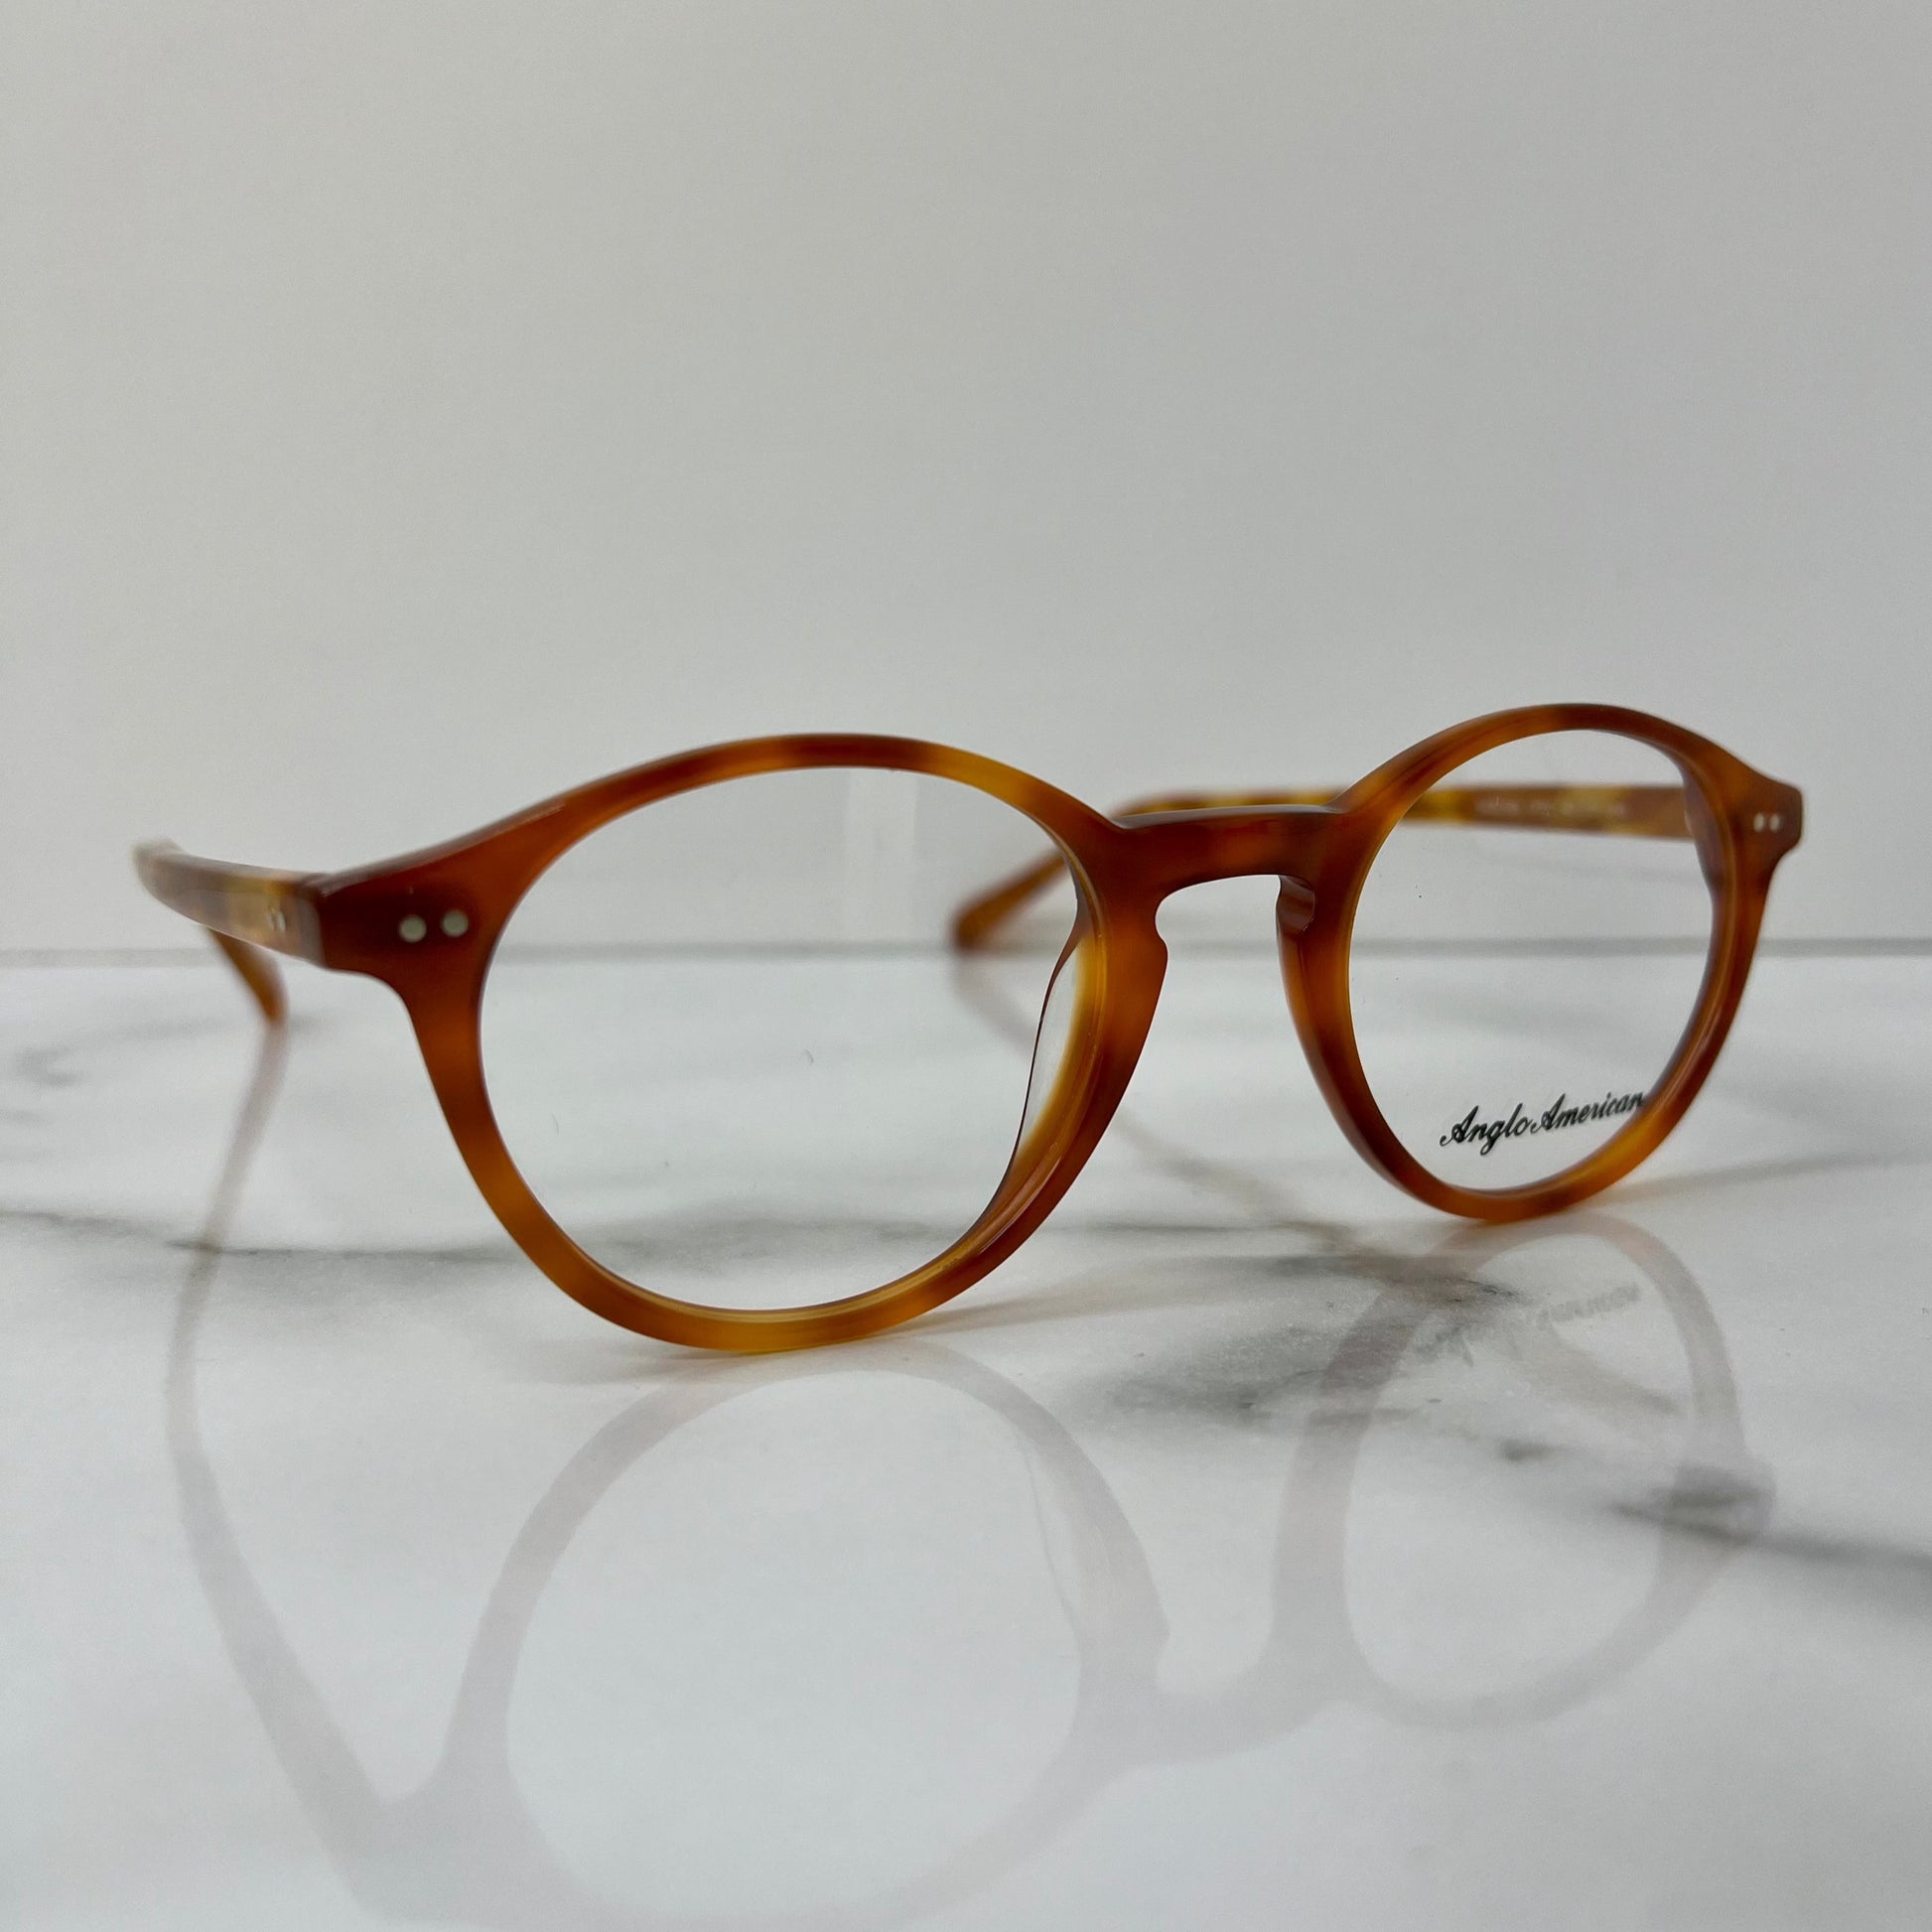 Anglo American 406 Optical Glasses Caramel England Designer Eyeglasses Classic